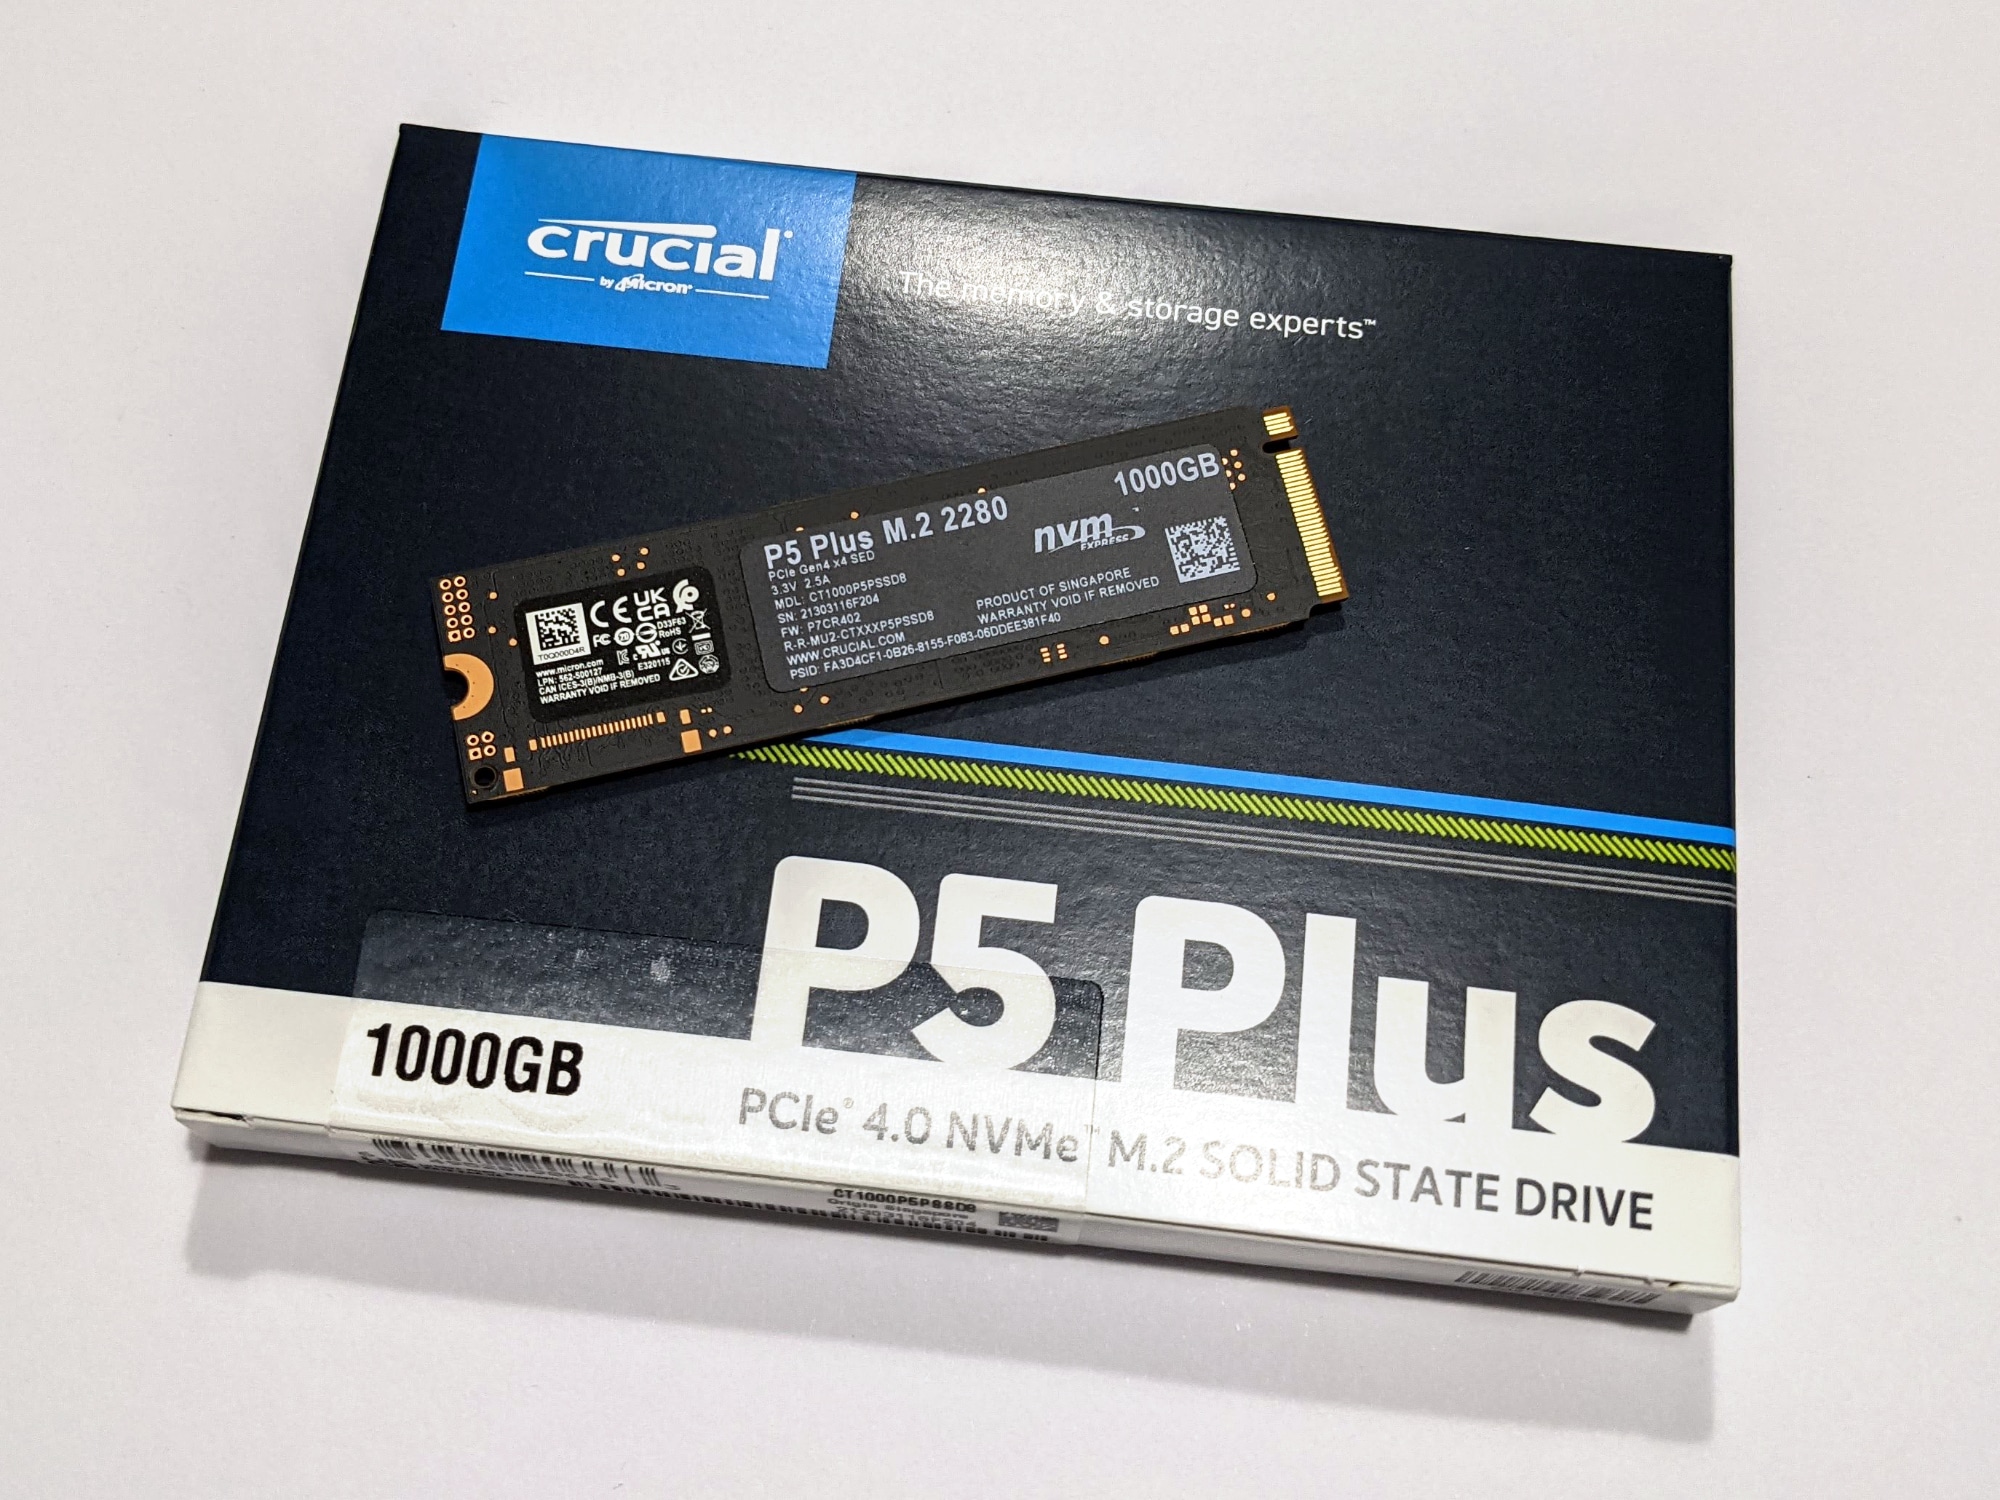 Crucial P5 Plus SSD 1TB M.2 2280 PCIe Gen4 x4 - CT1000P5PSSD8